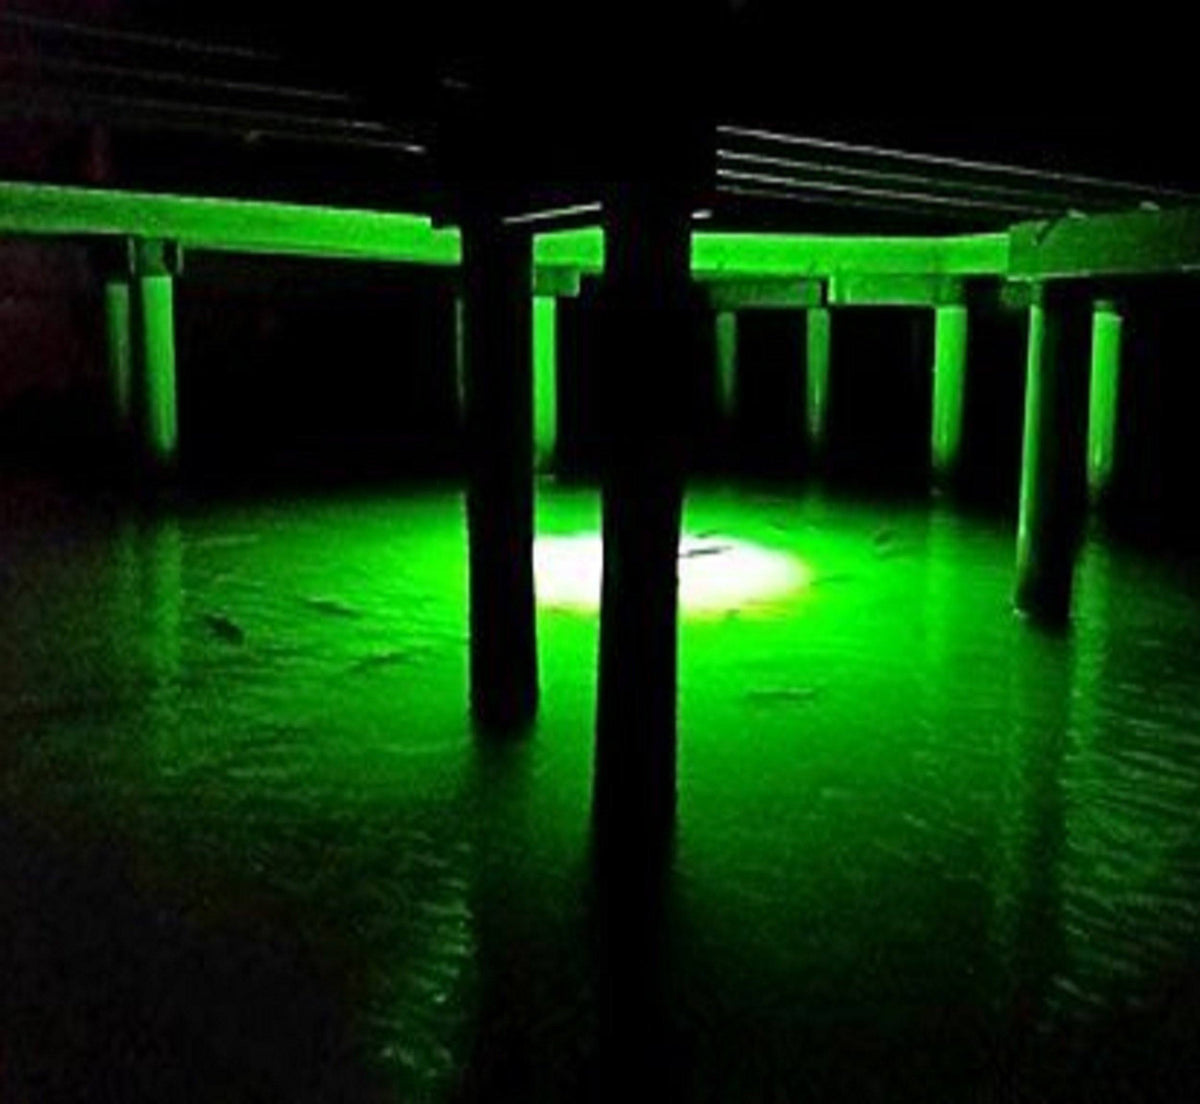 Green Blob Outdoors New Underwater LED Fishing Light 15000 Lumens 12V  Battery review 